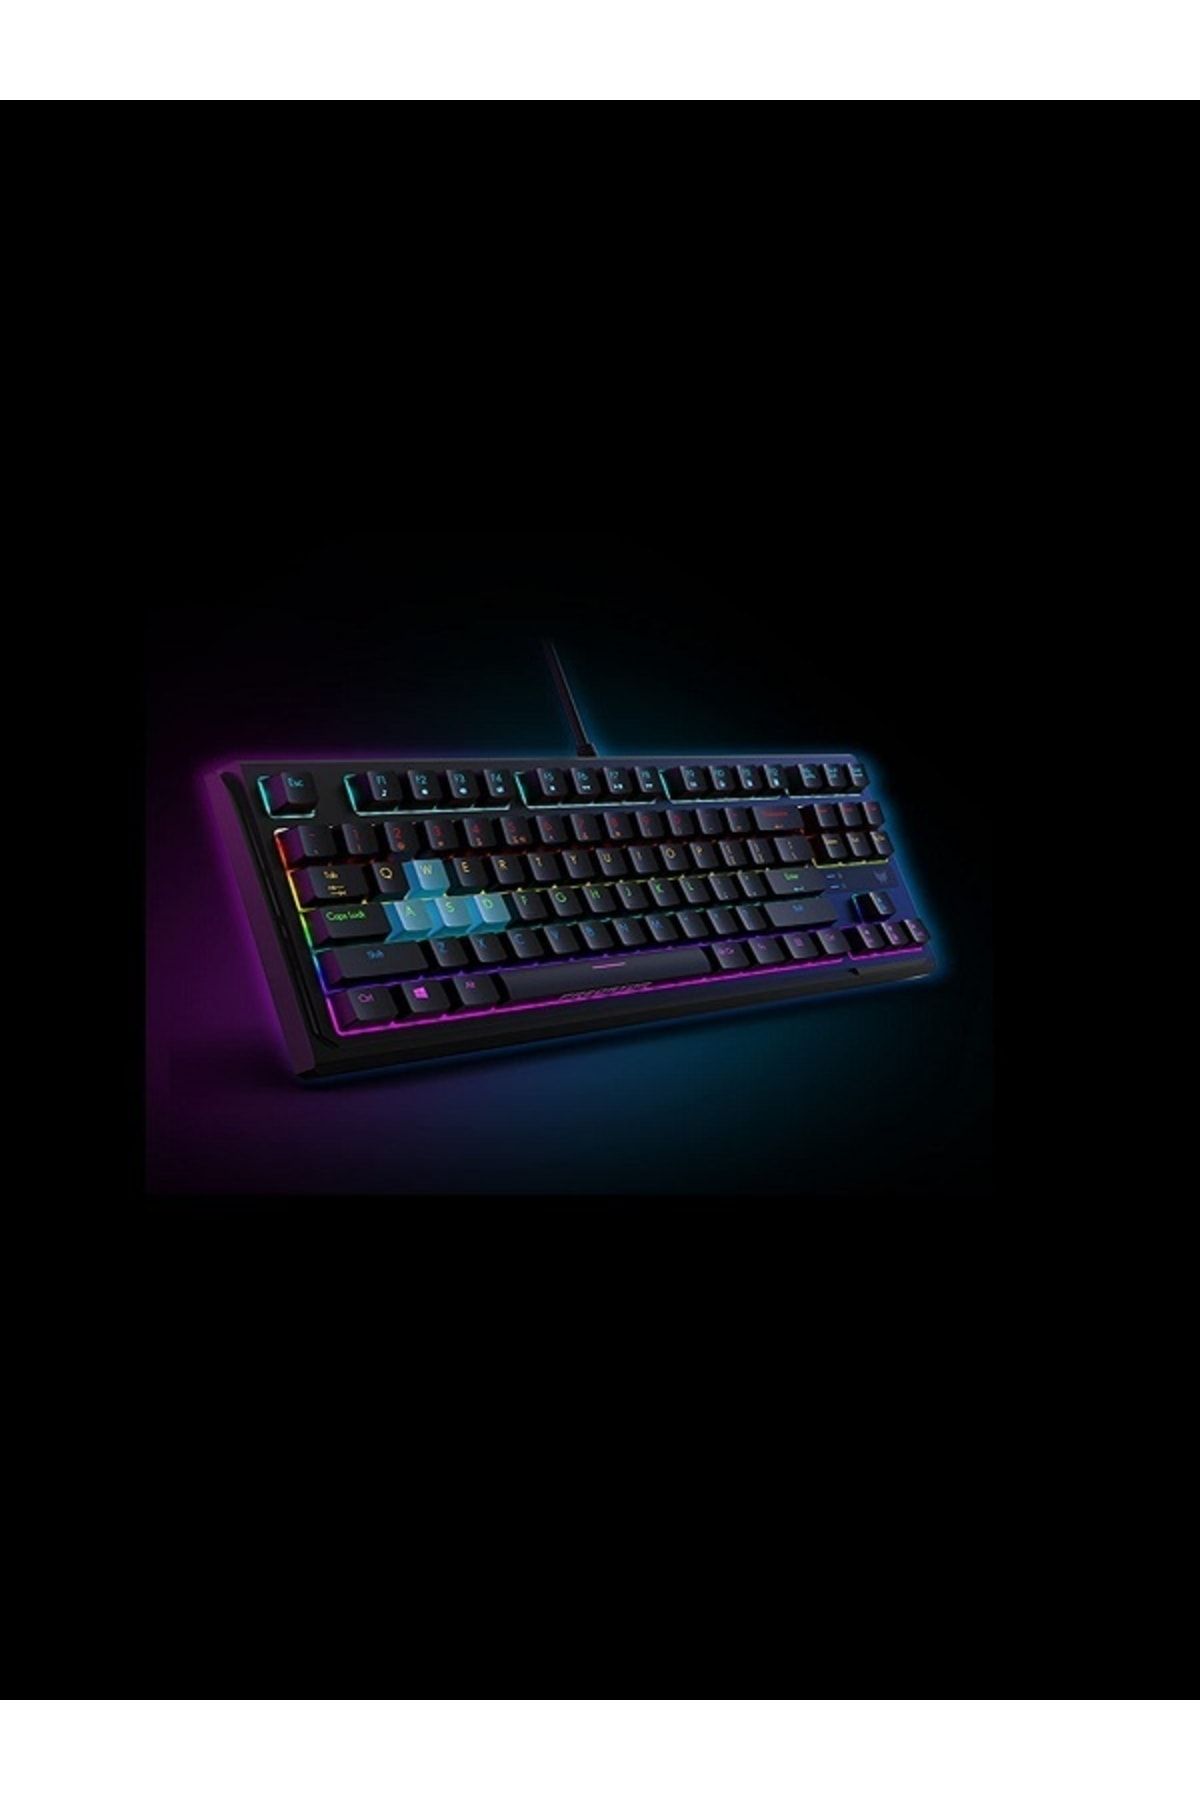 ACER Predator Aethon 301 Tkl Gaming Keyboard - Gateron Blue Switches | 6 Zone Backlit Led